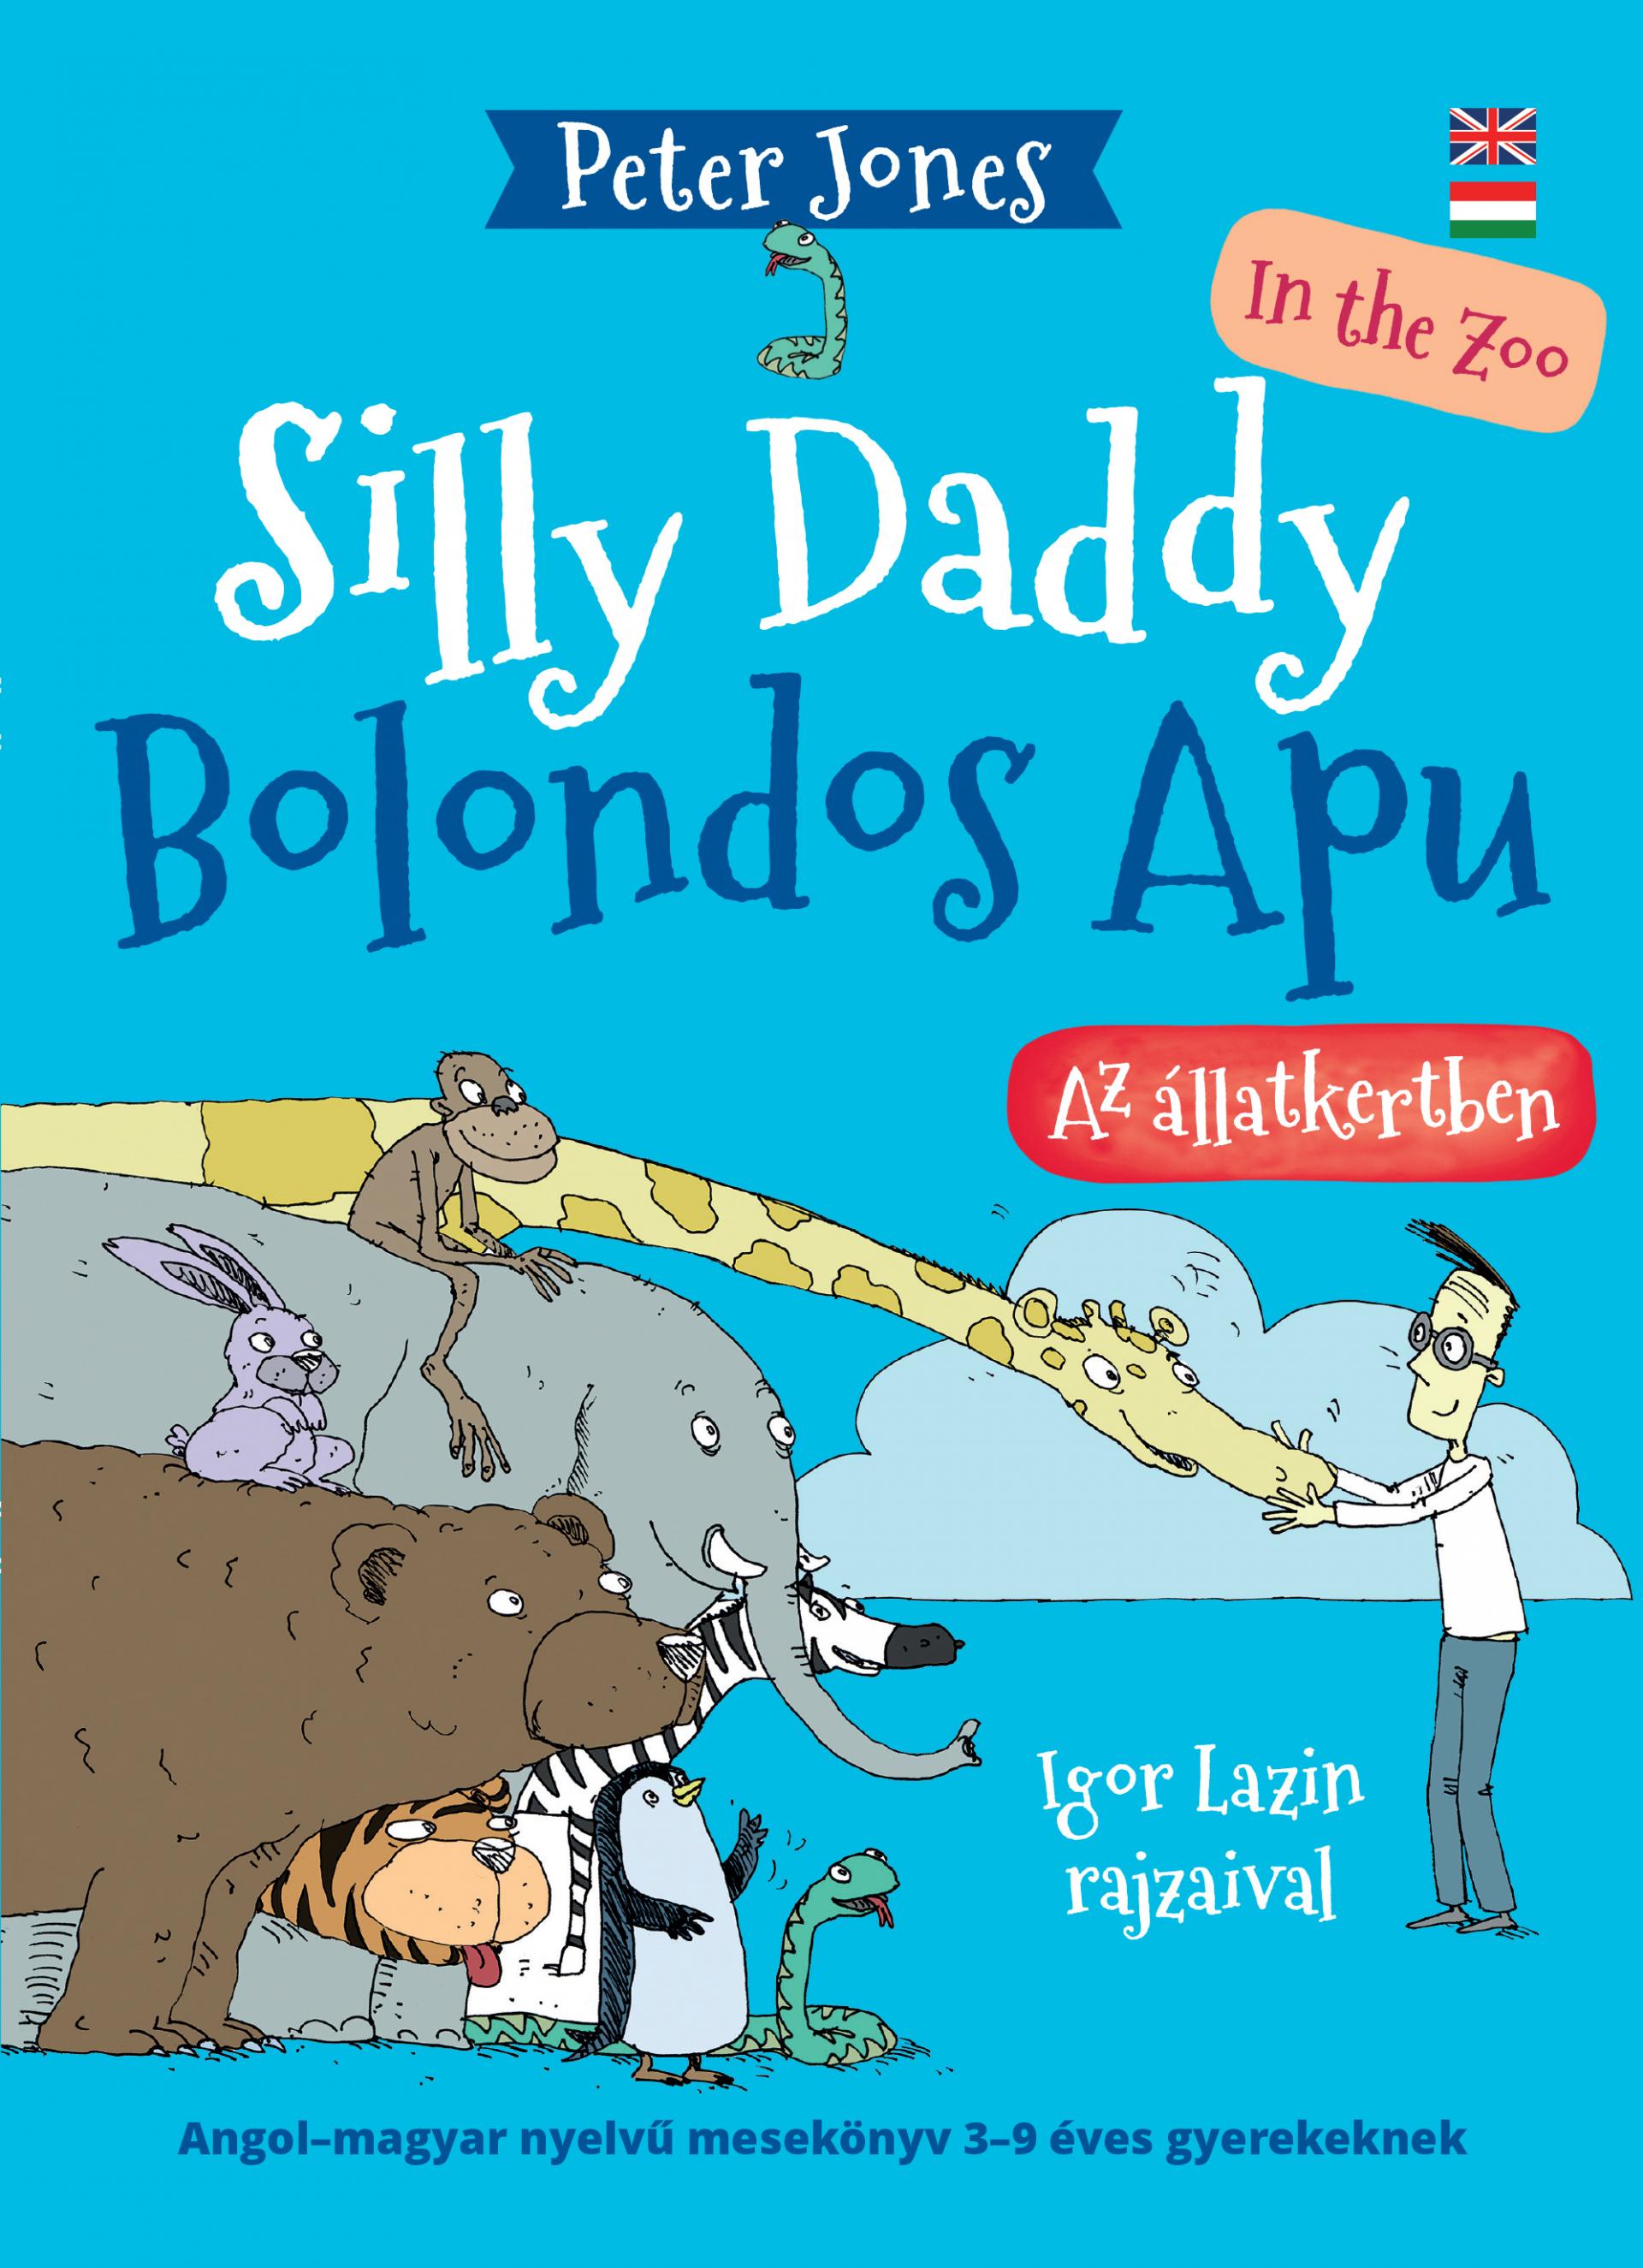 Bolondos Apu az állatkertben / Silly ?Daddy in the Zoo